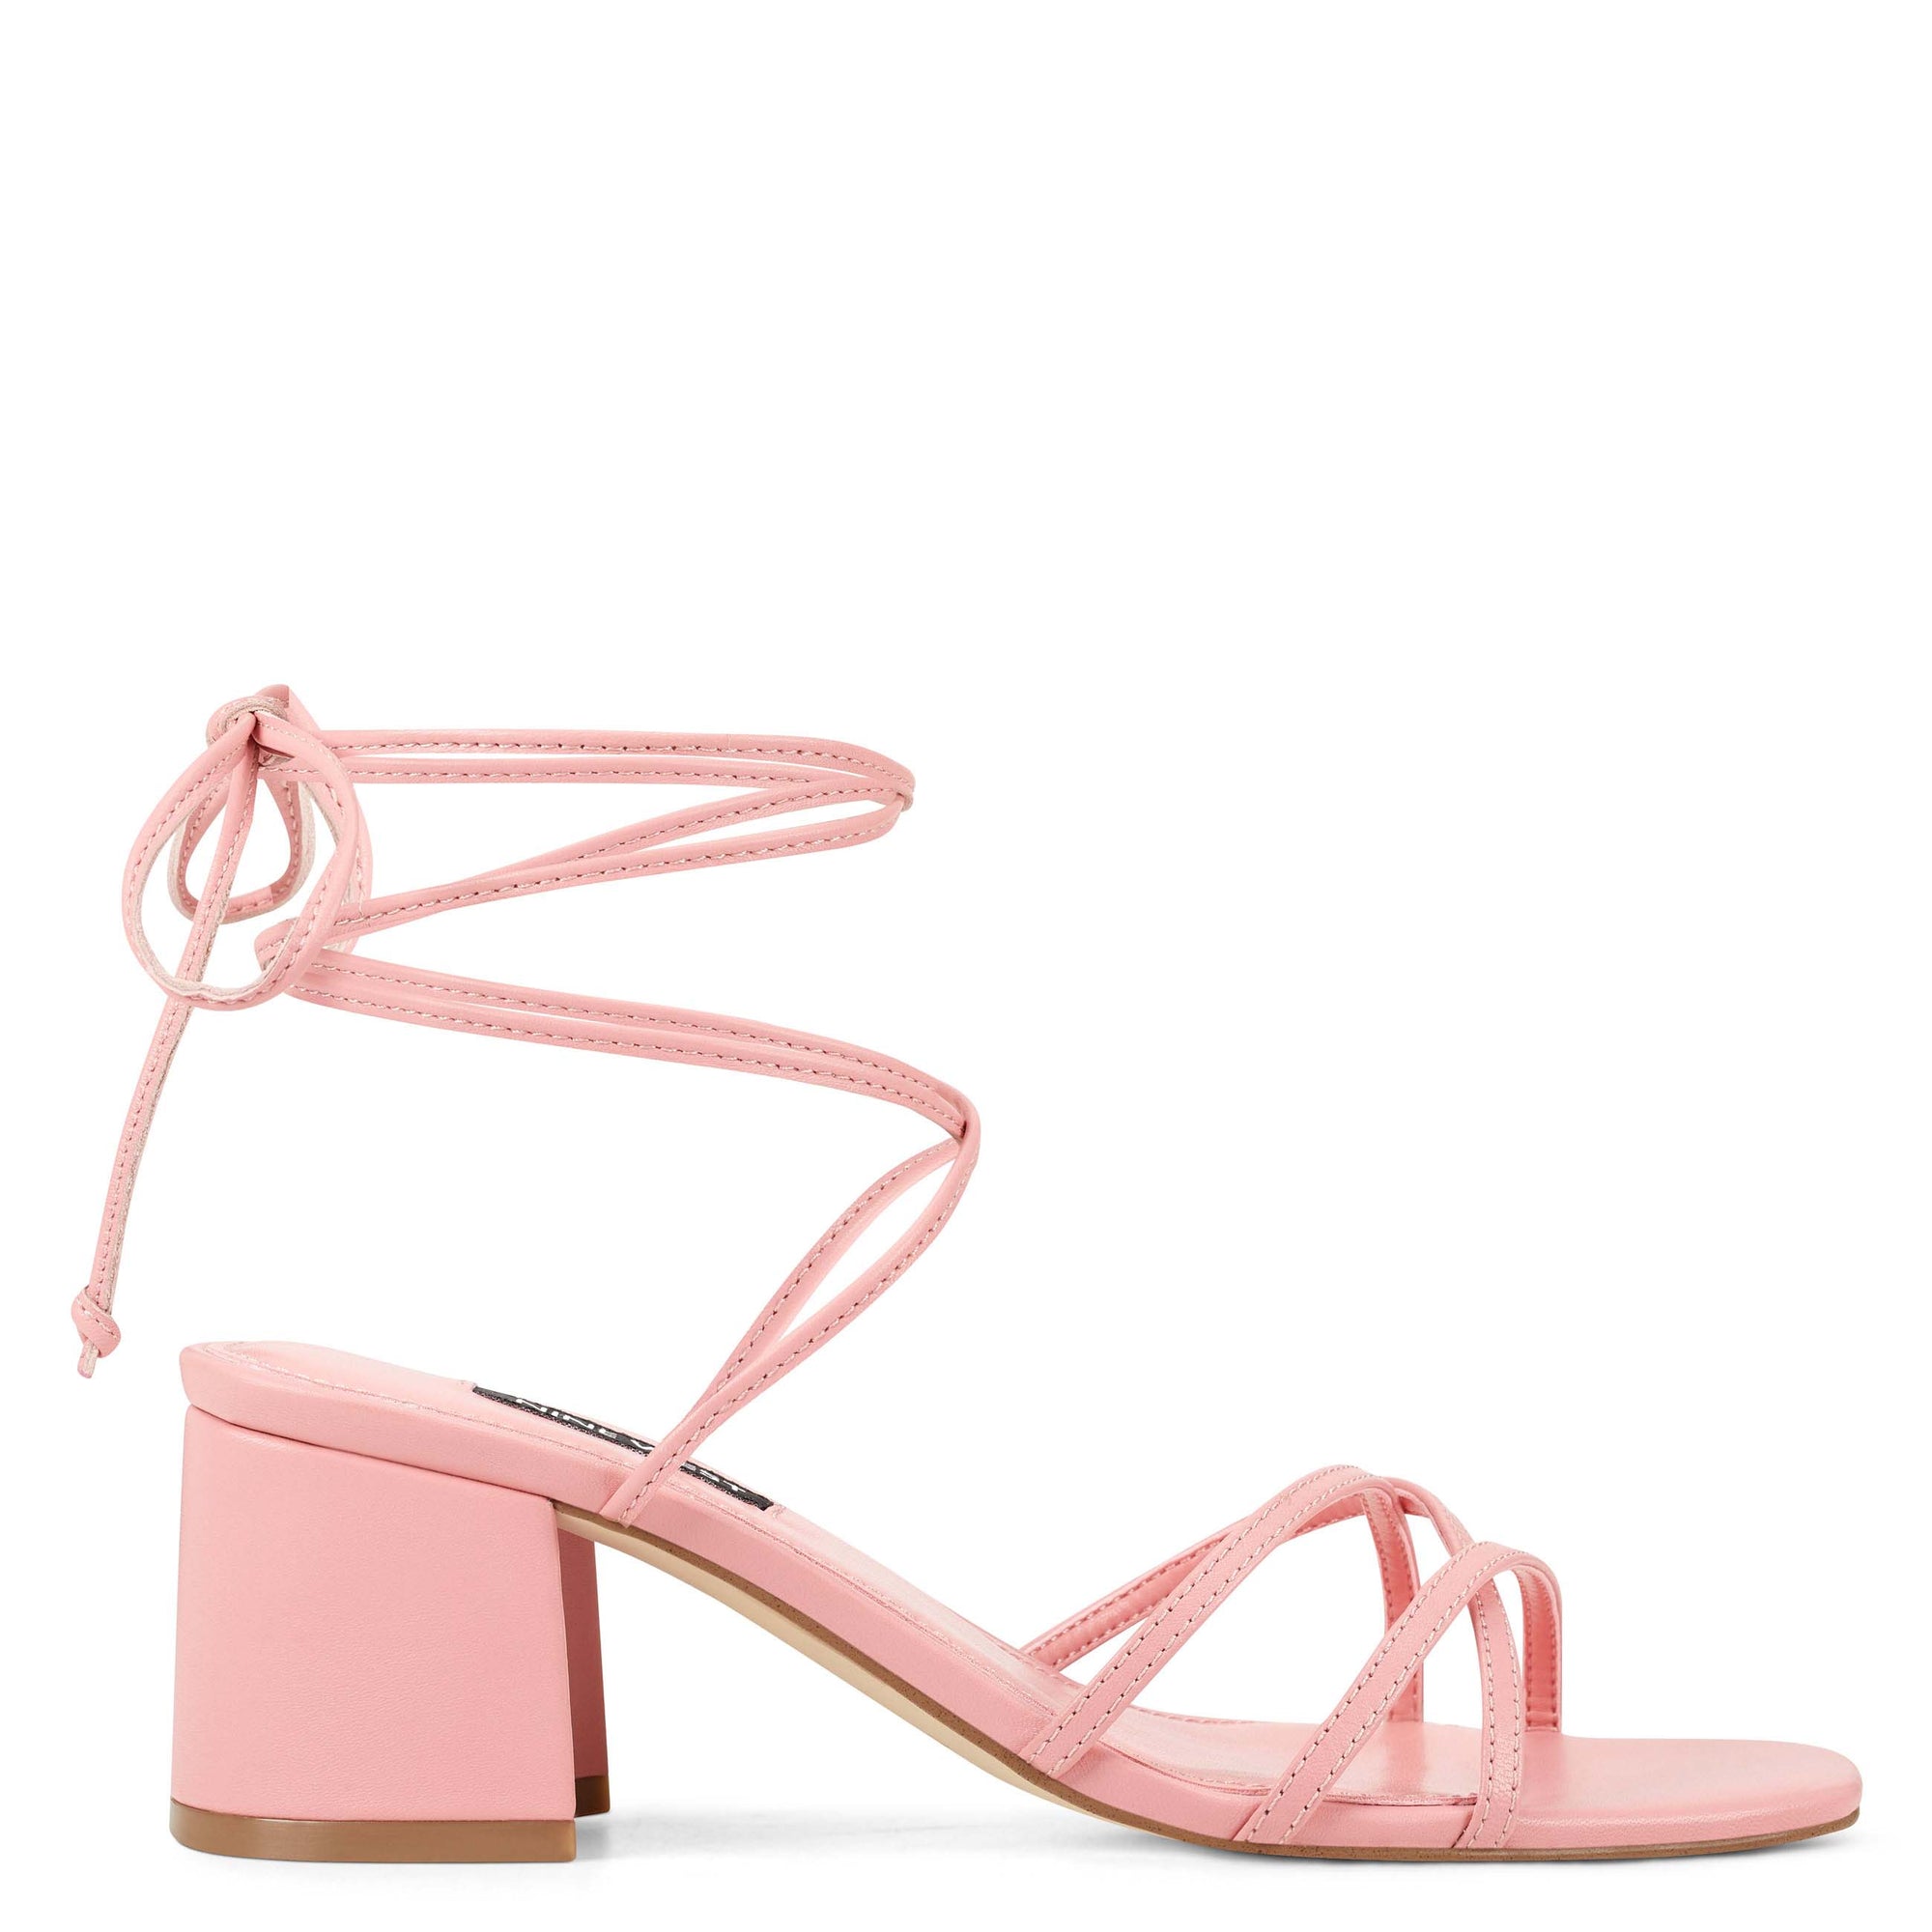 nine west pink shoes